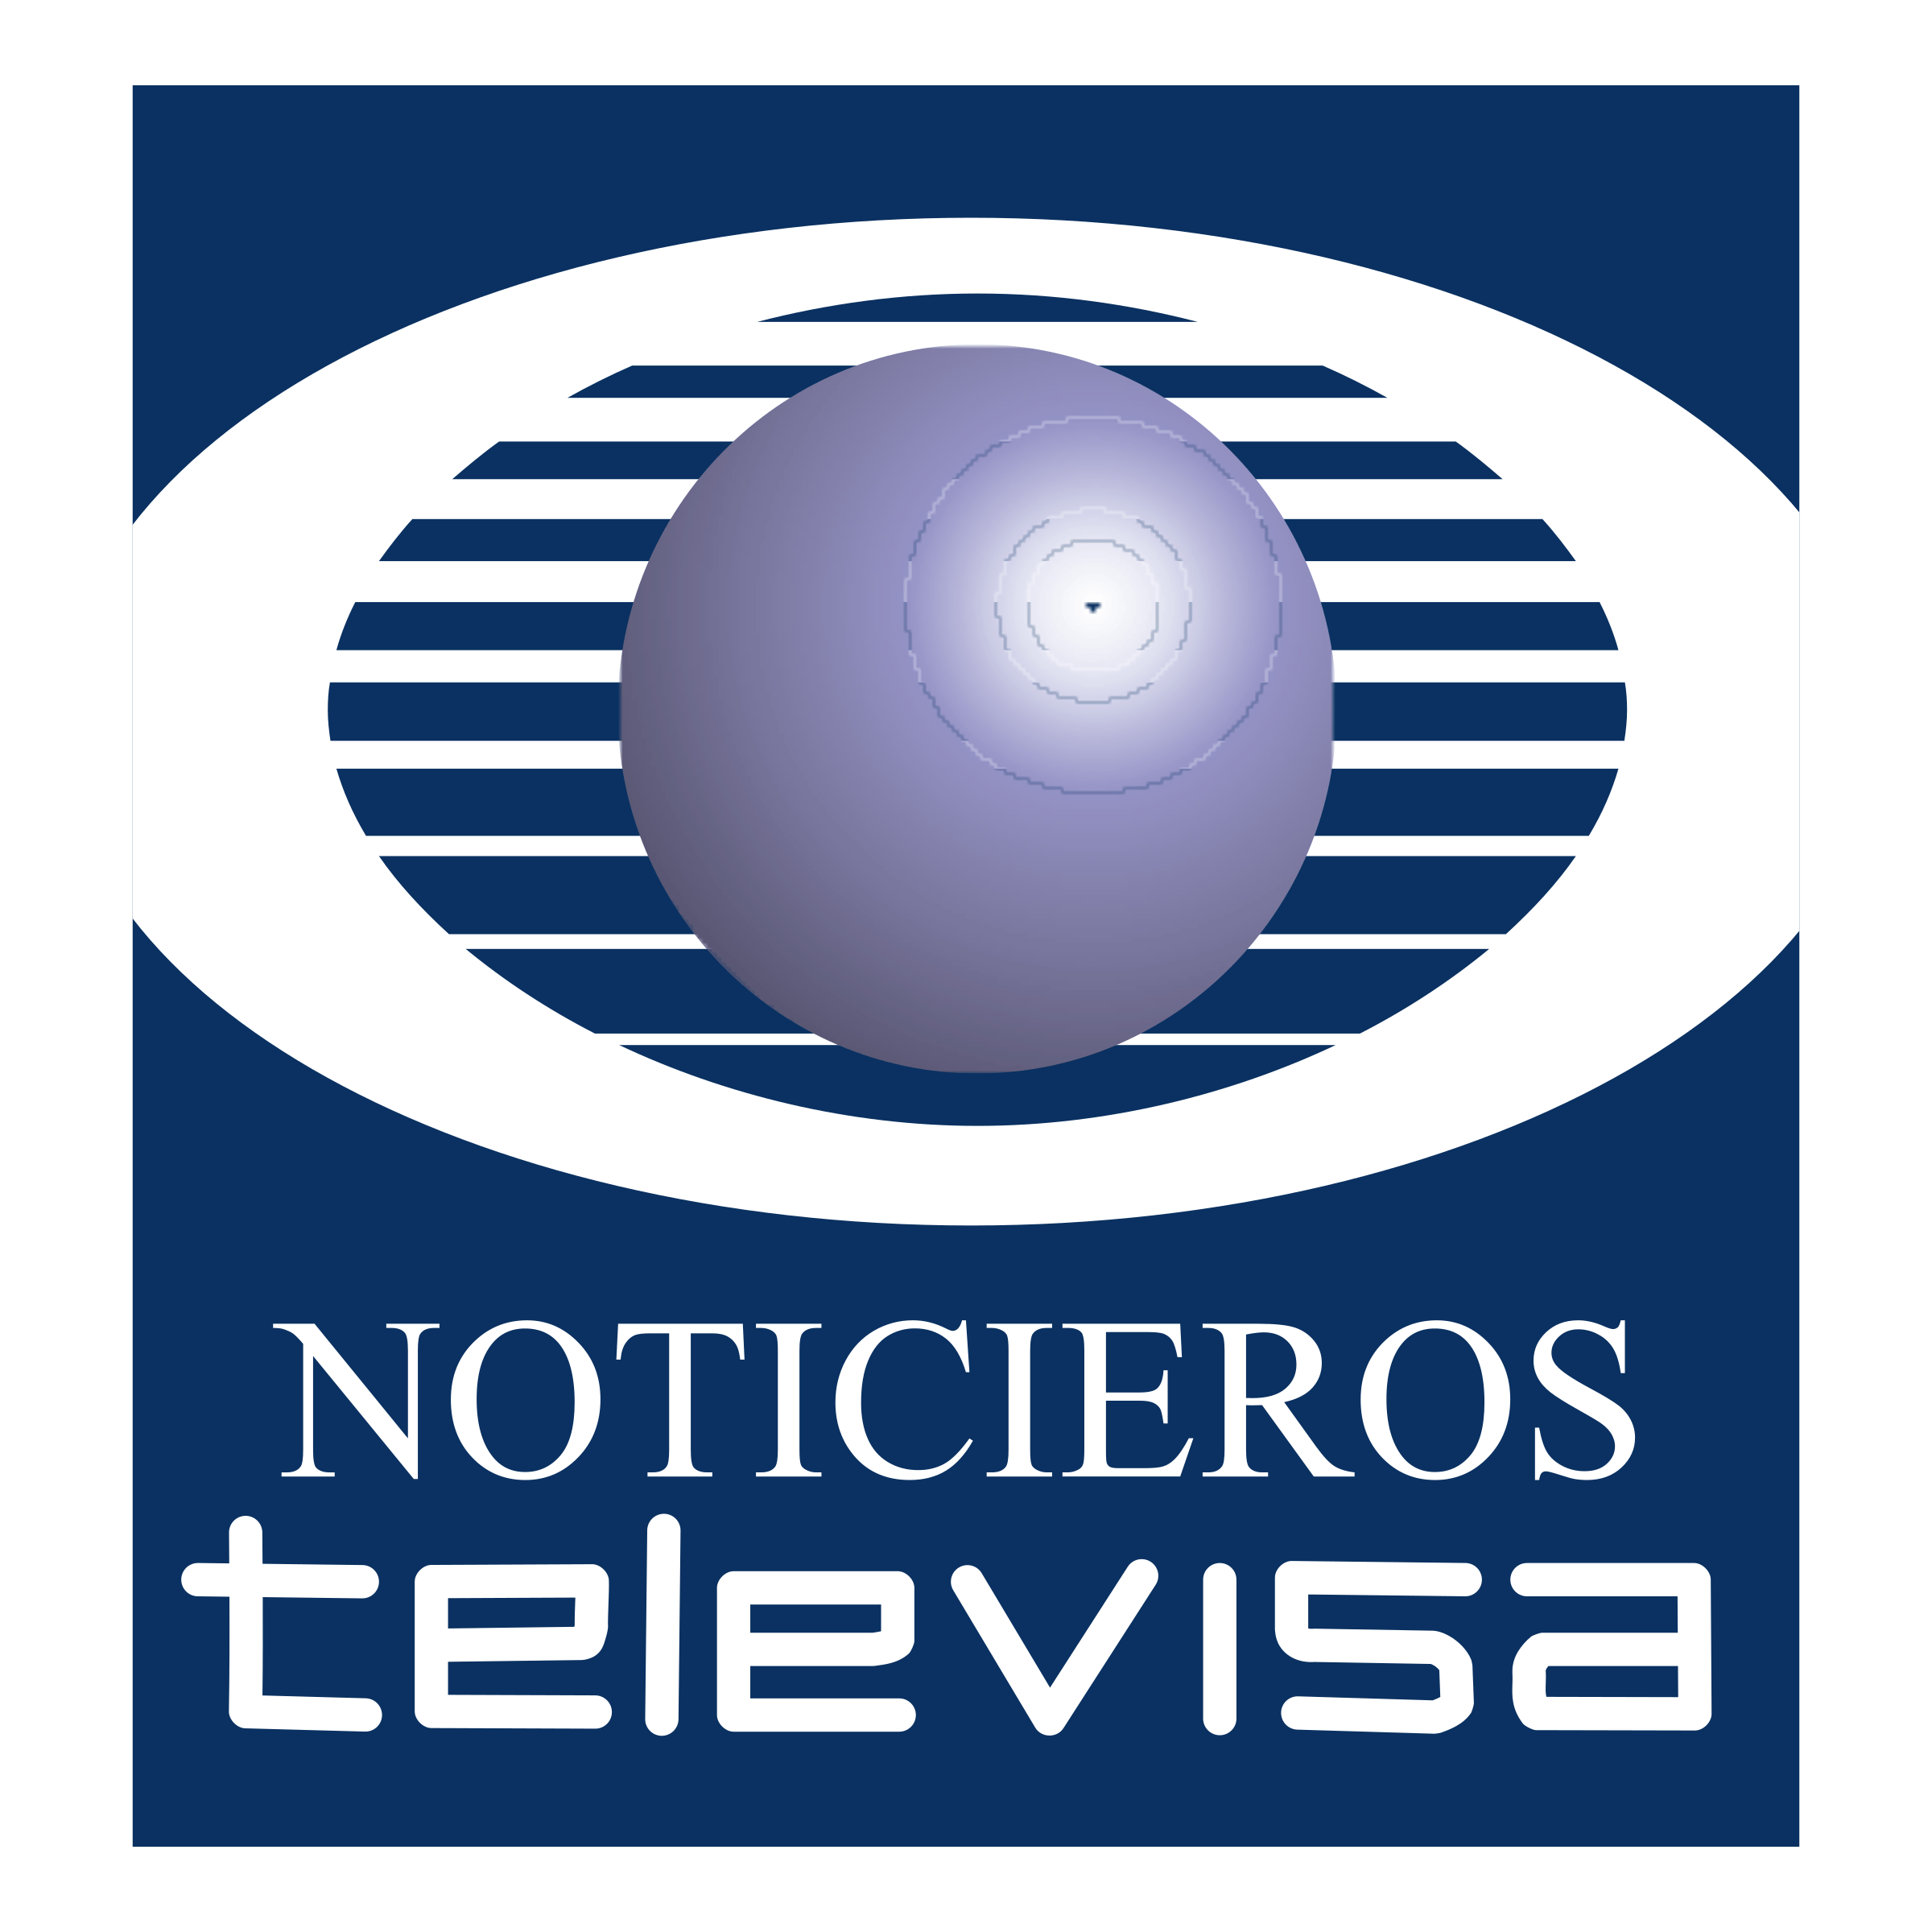 Televisa Logo - Televisa Logo PNG Transparent & SVG Vector - Freebie Supply